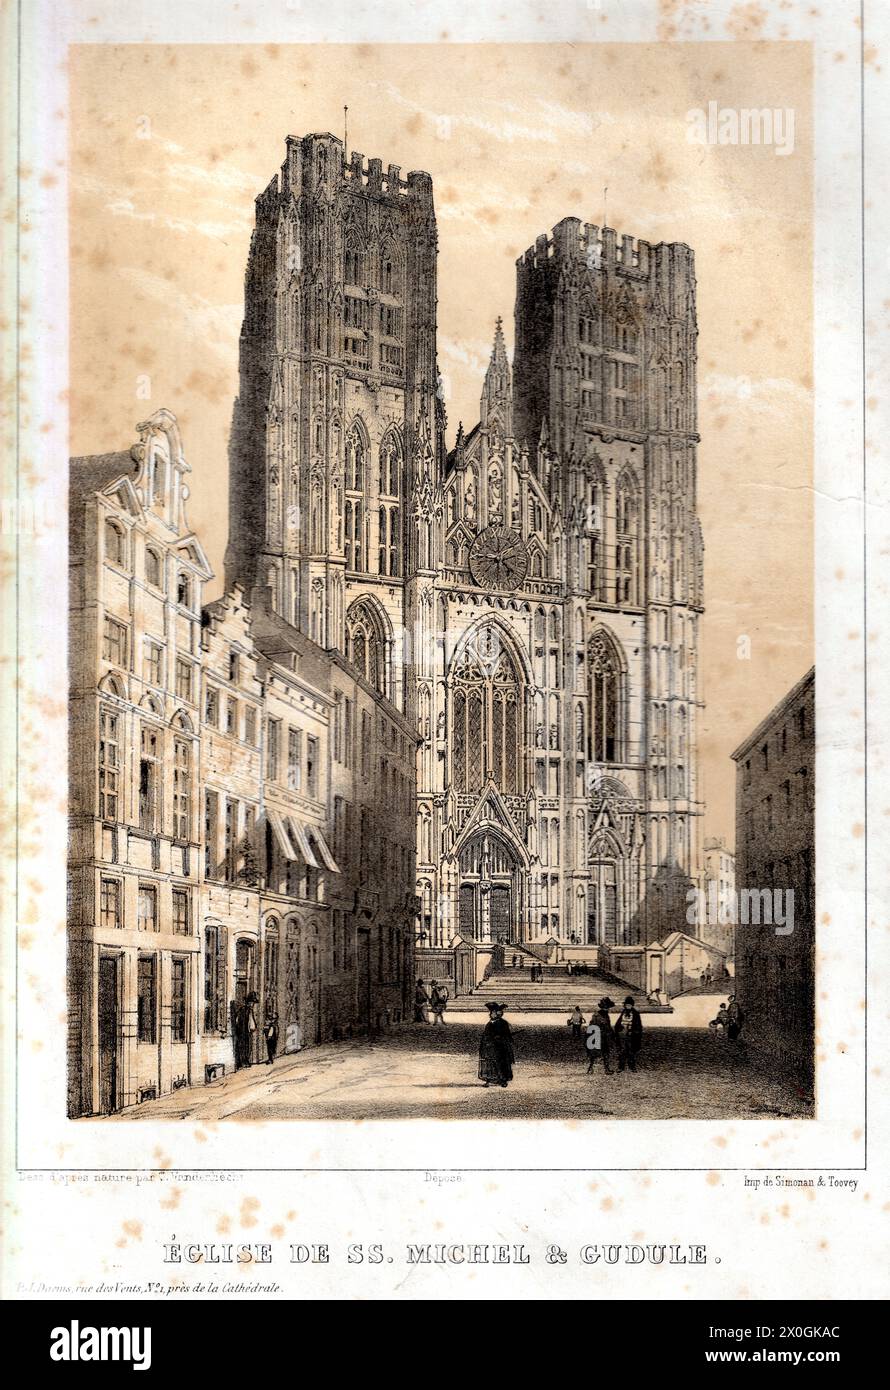 Guillaume Victor Vander Hecht (1817-91) - Bruxelles, Eglise De SS Michel & Gudula, Simonau & Toovey Stock Photo